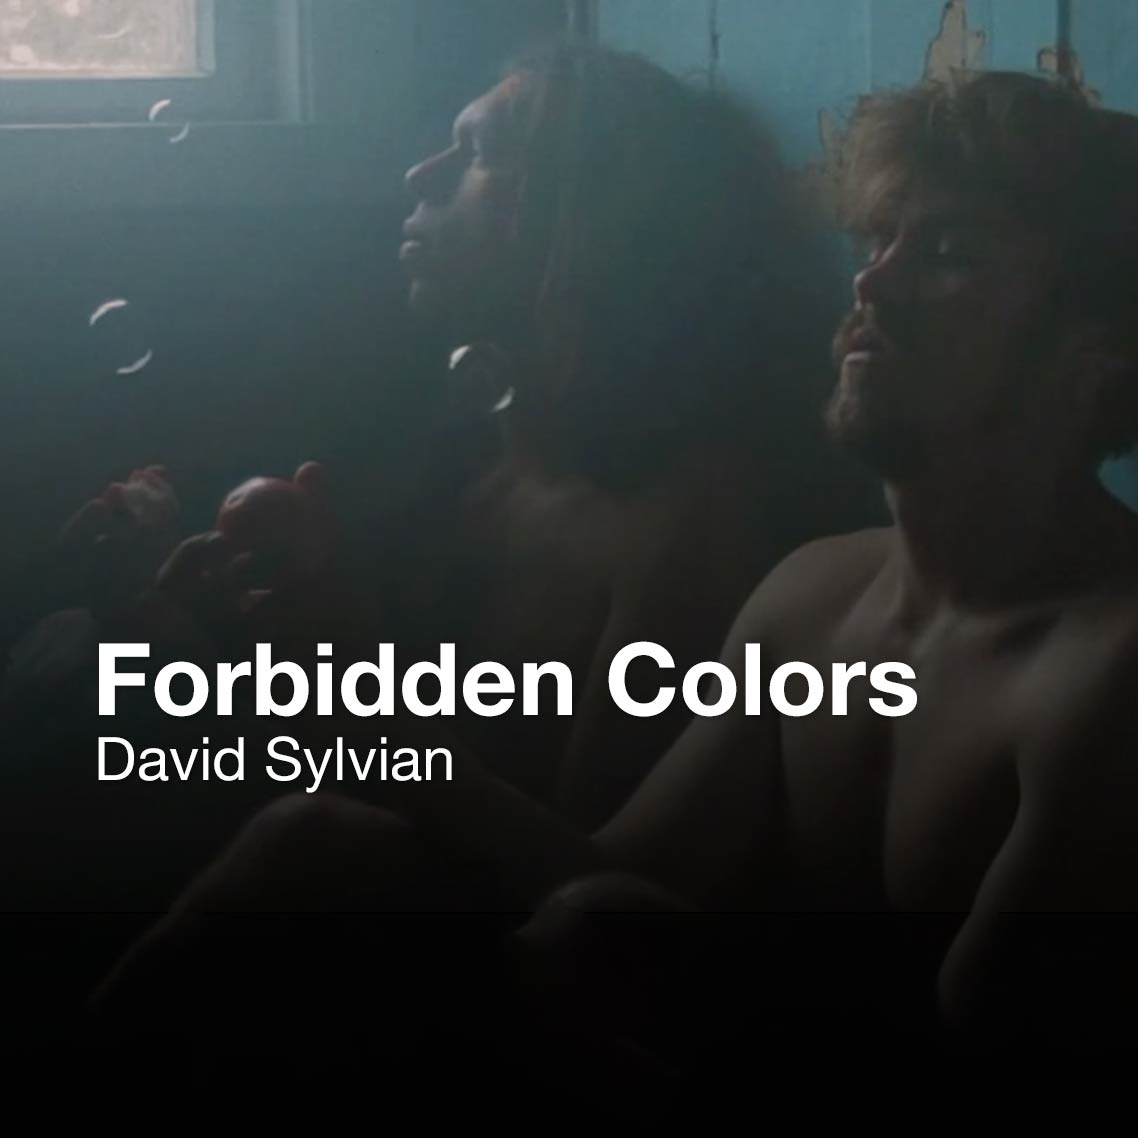 Forbidden Colors | music video 